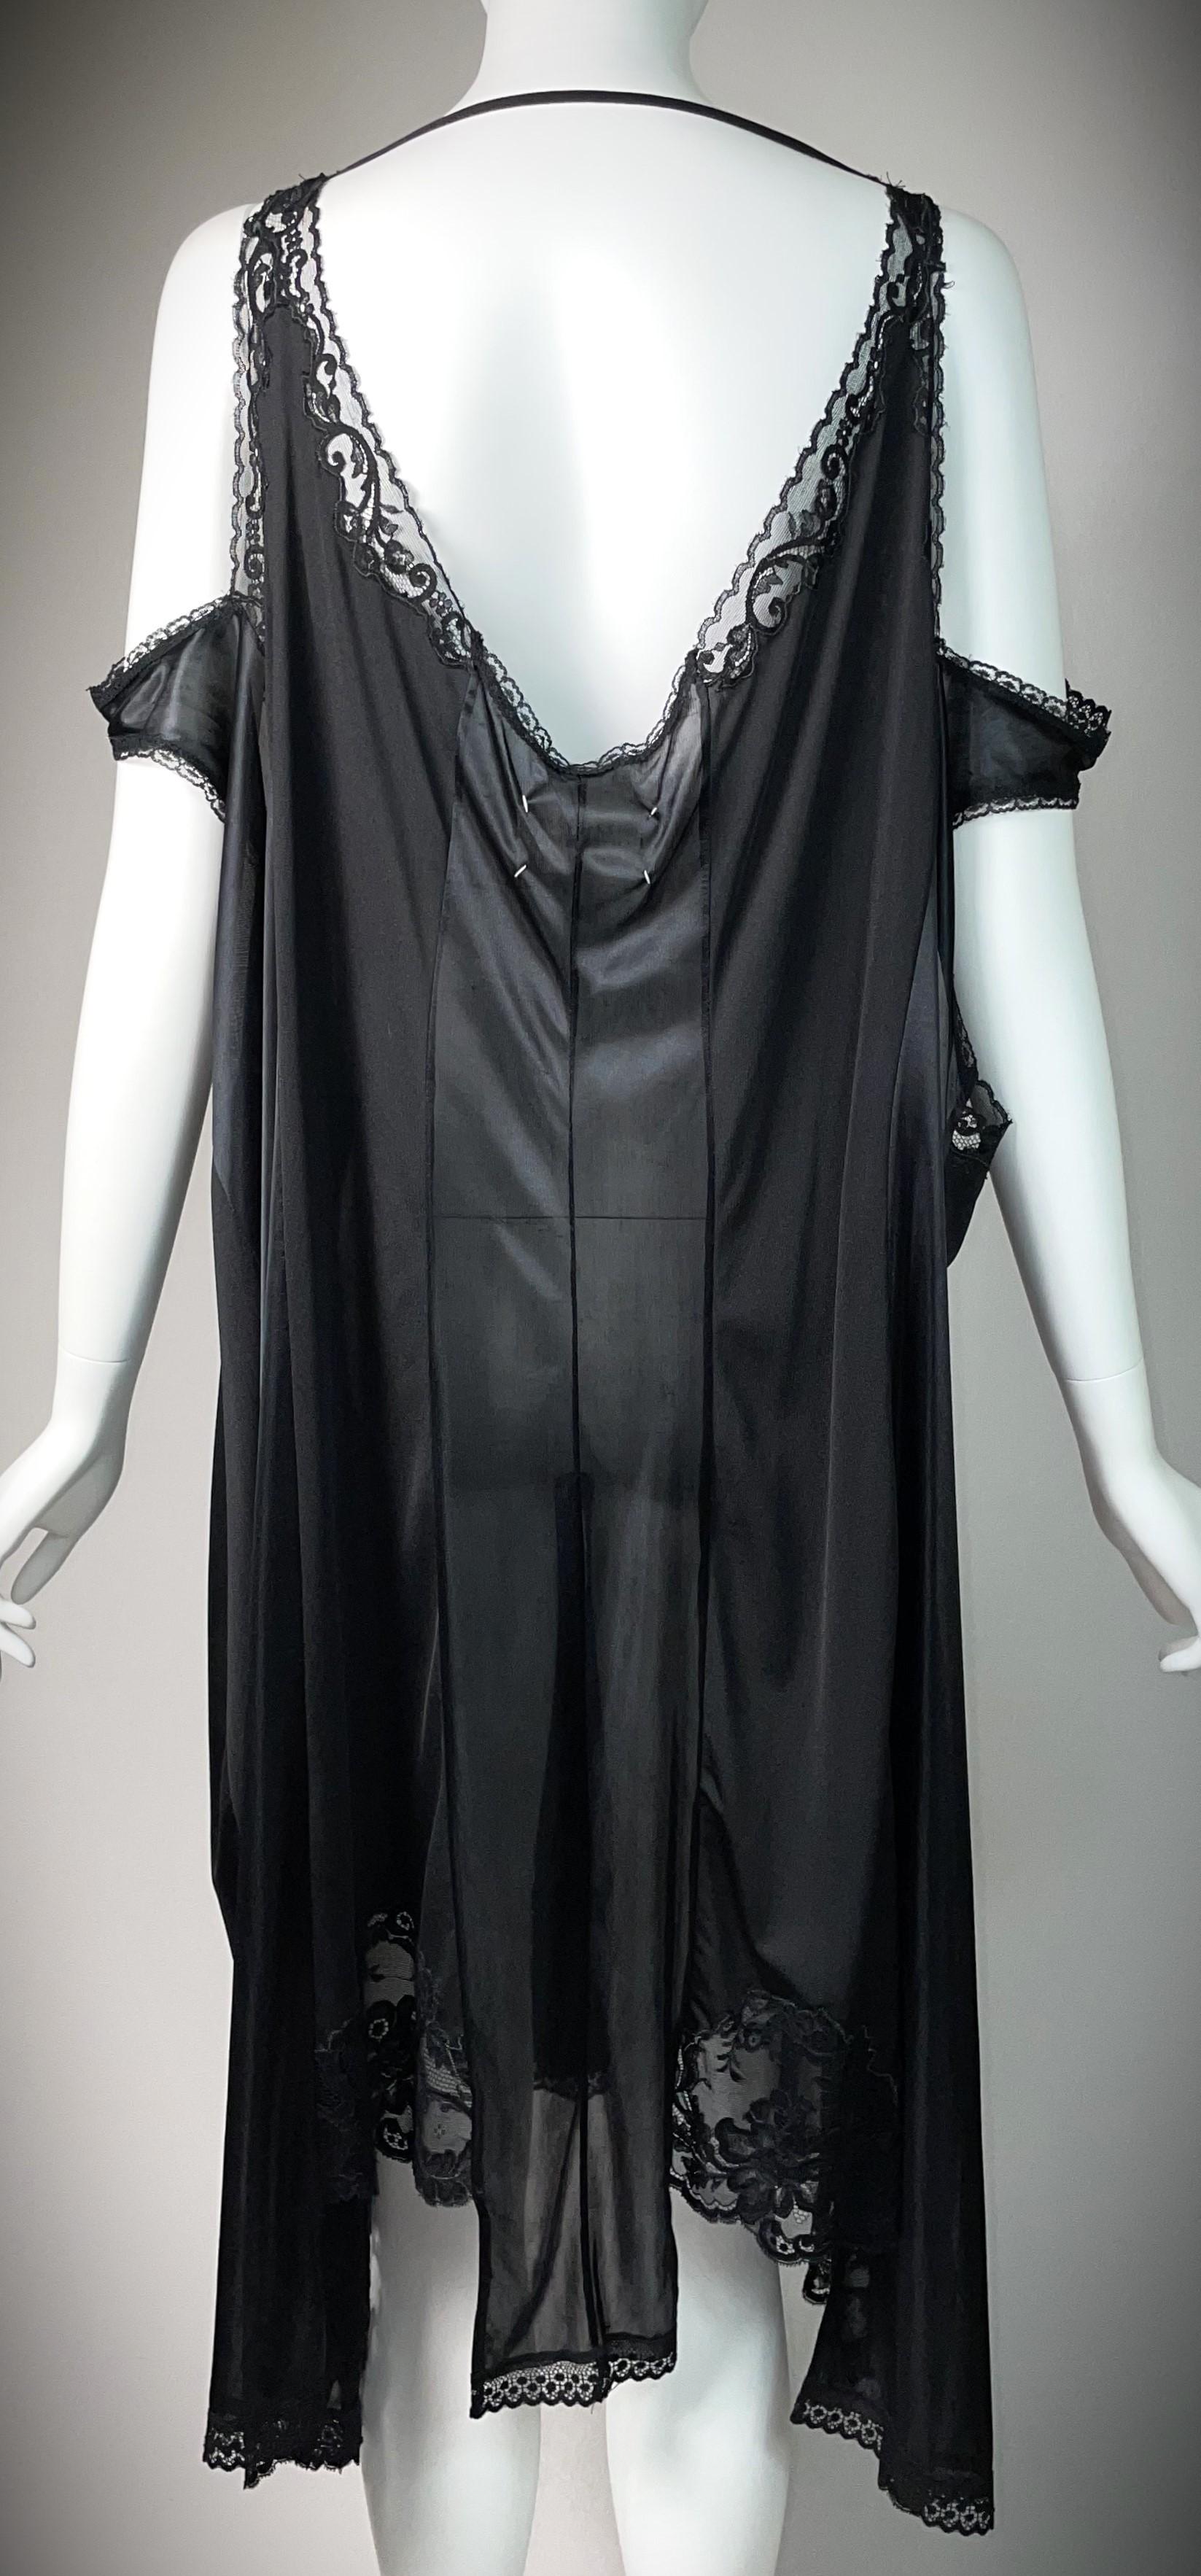 Women's Documented S/S 2000 Maison Martin Margiela Artisanal Runway Black Lace Dress